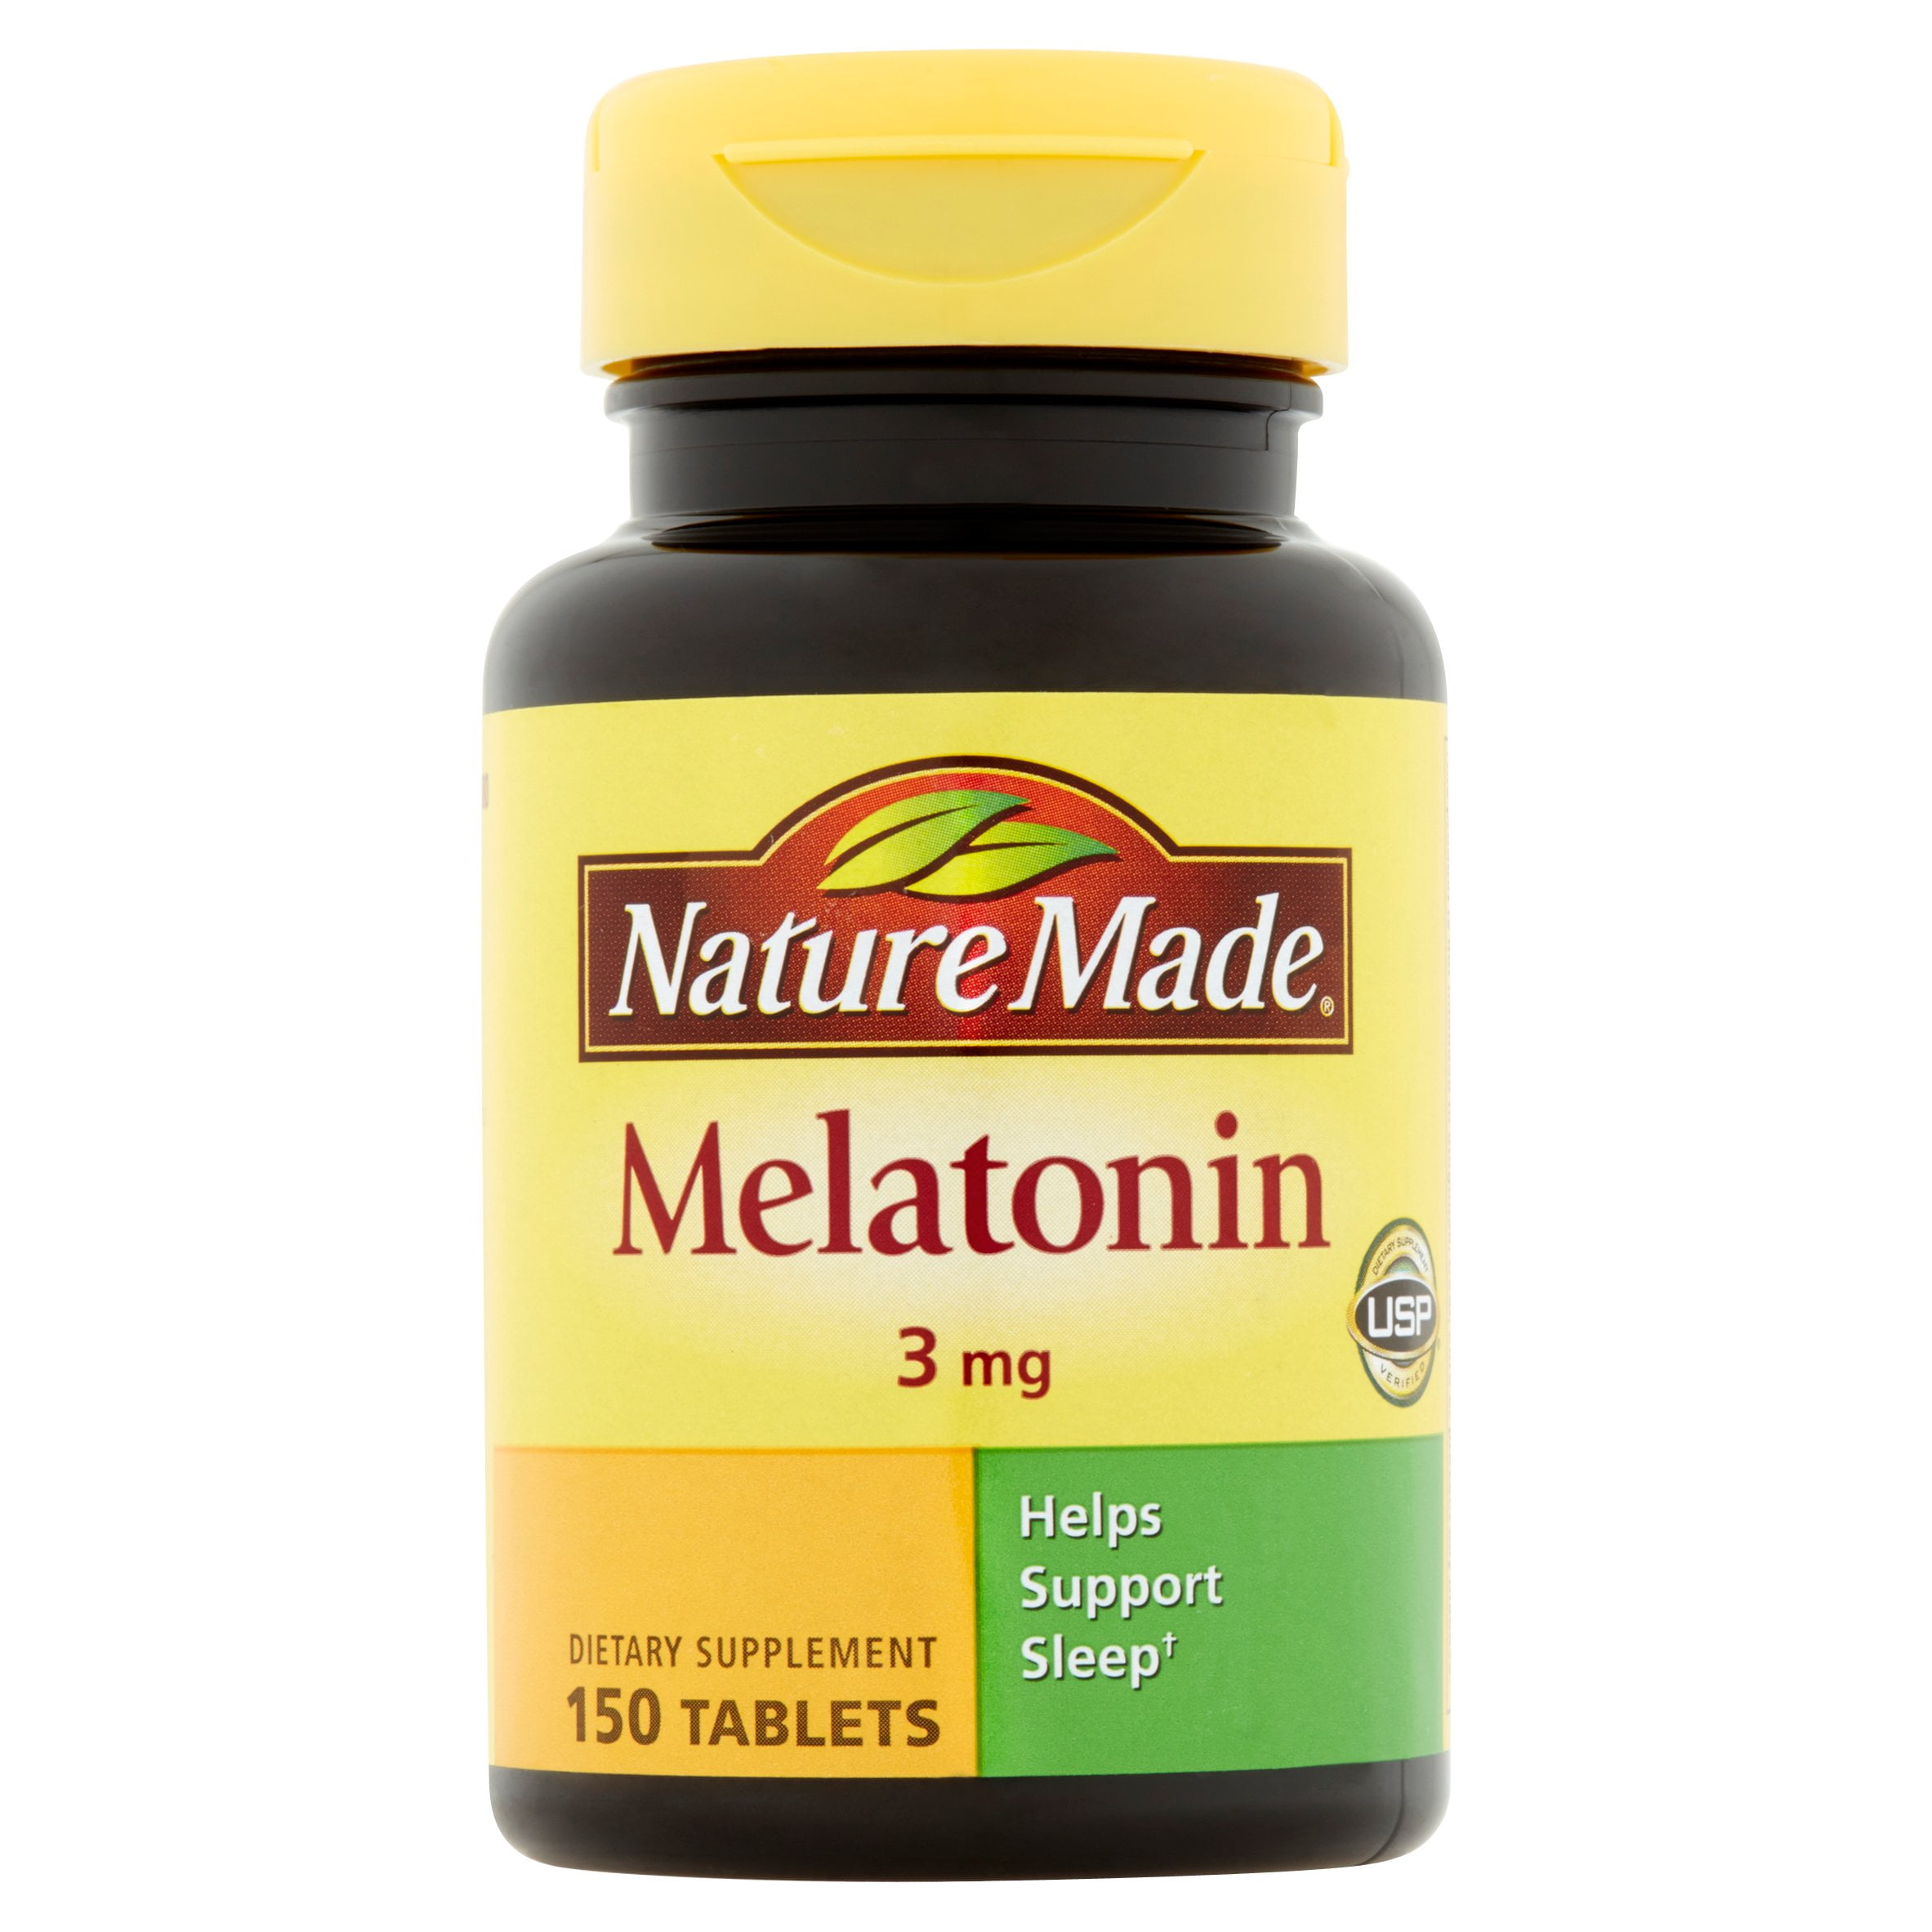 Melatonin capsules